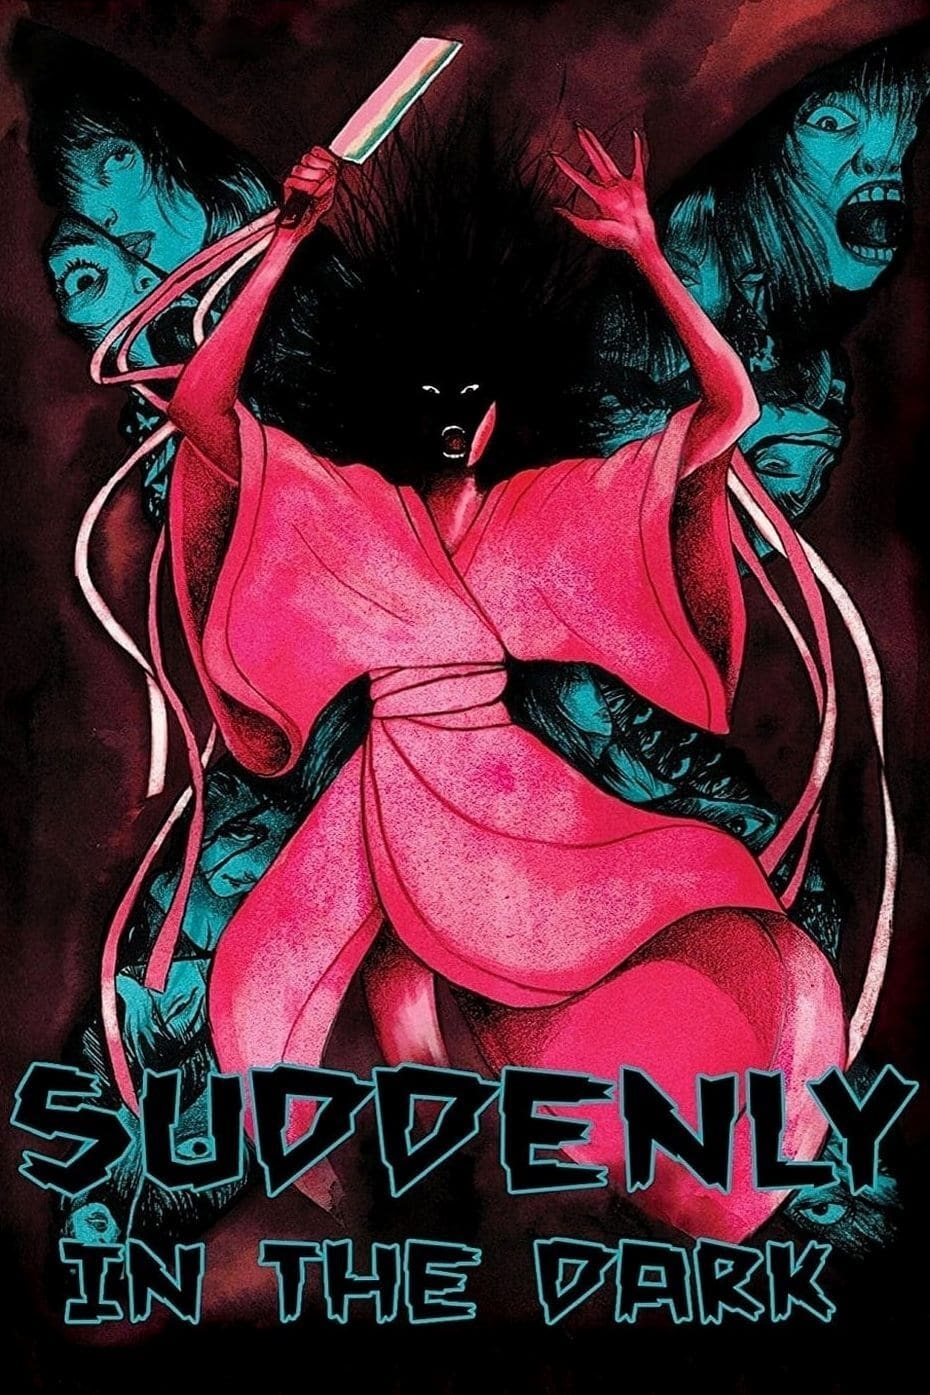 Suddenly in the Dark (1981)